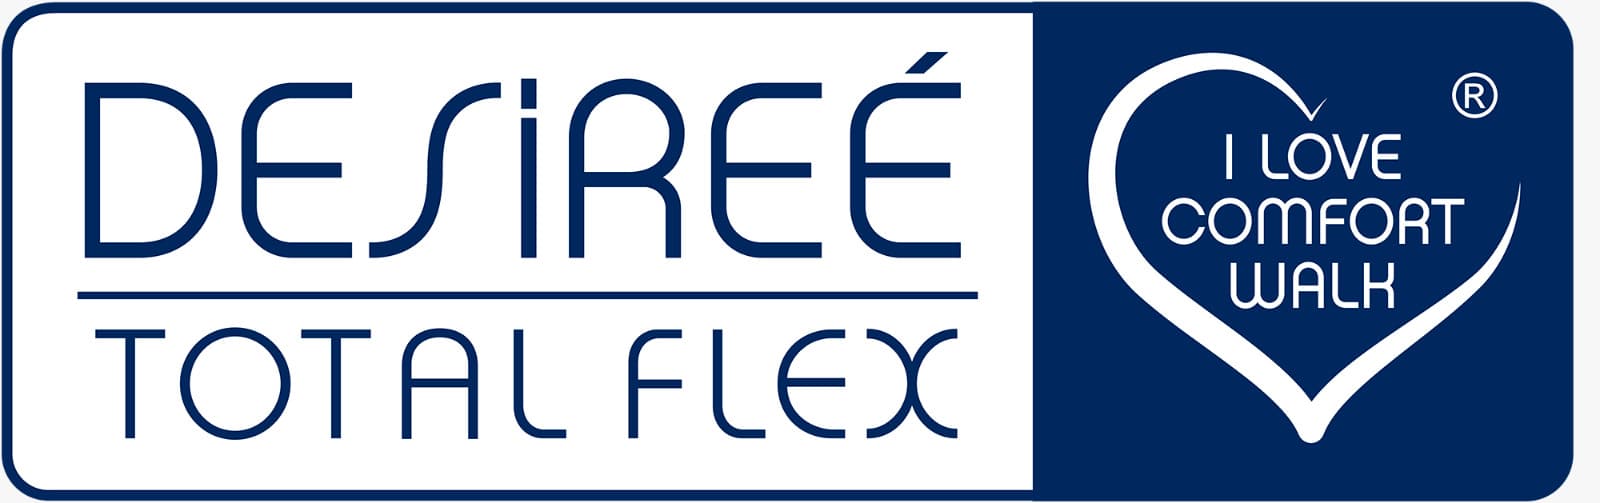 desiree total flex logo